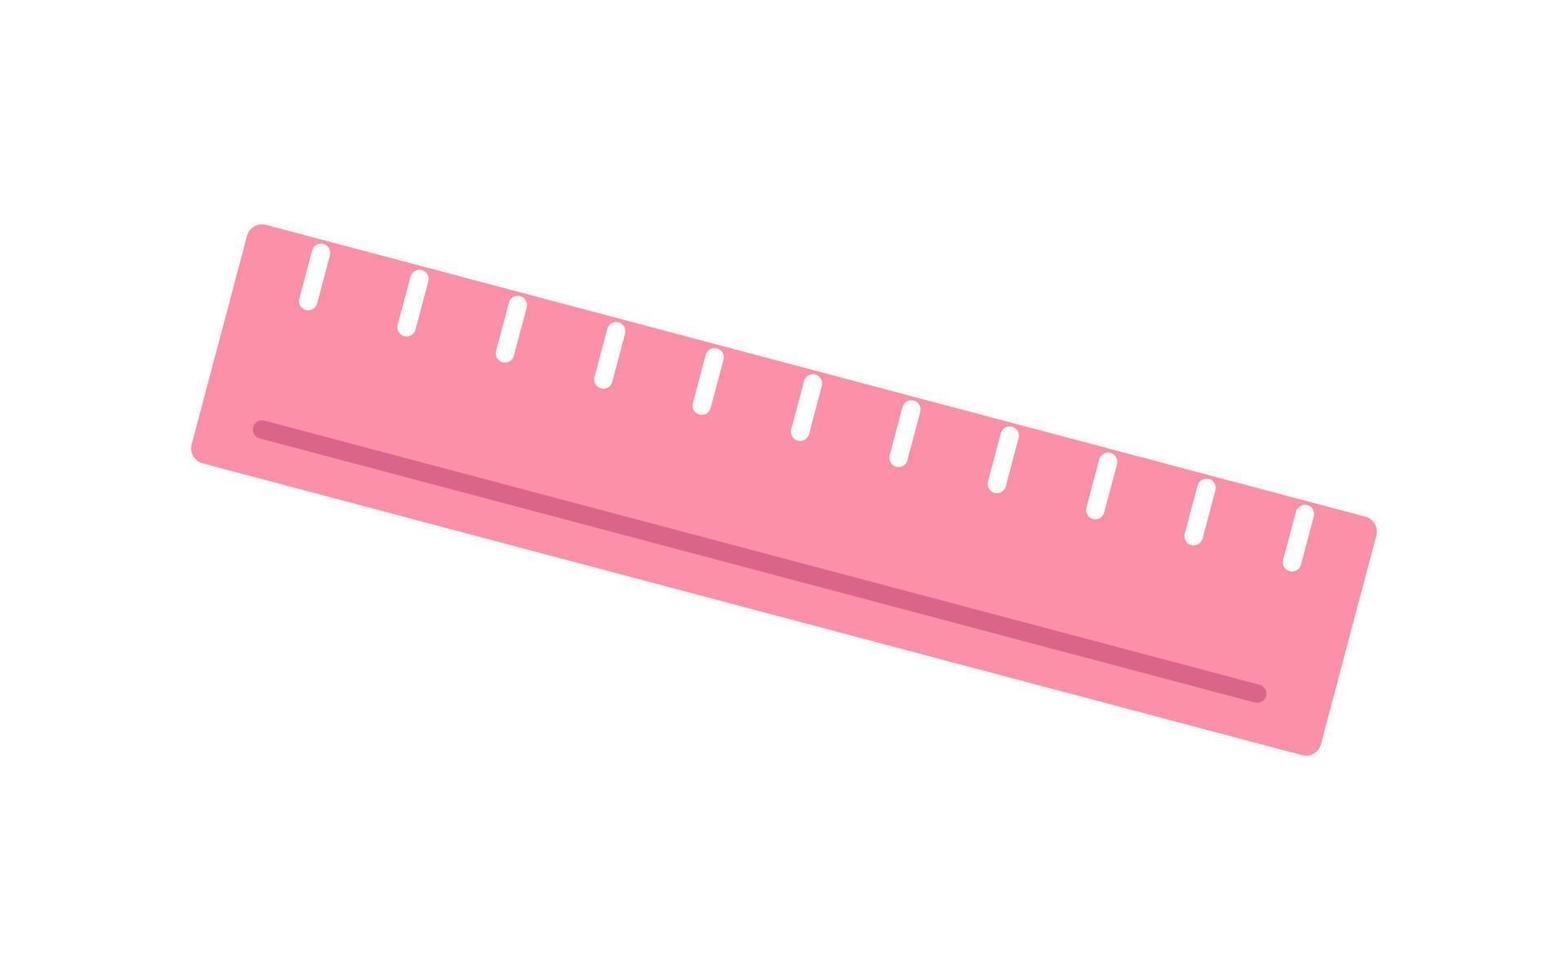 régua de vetor rosa. régua escolar fofa - ferramenta de escala de medição. de volta à escola.